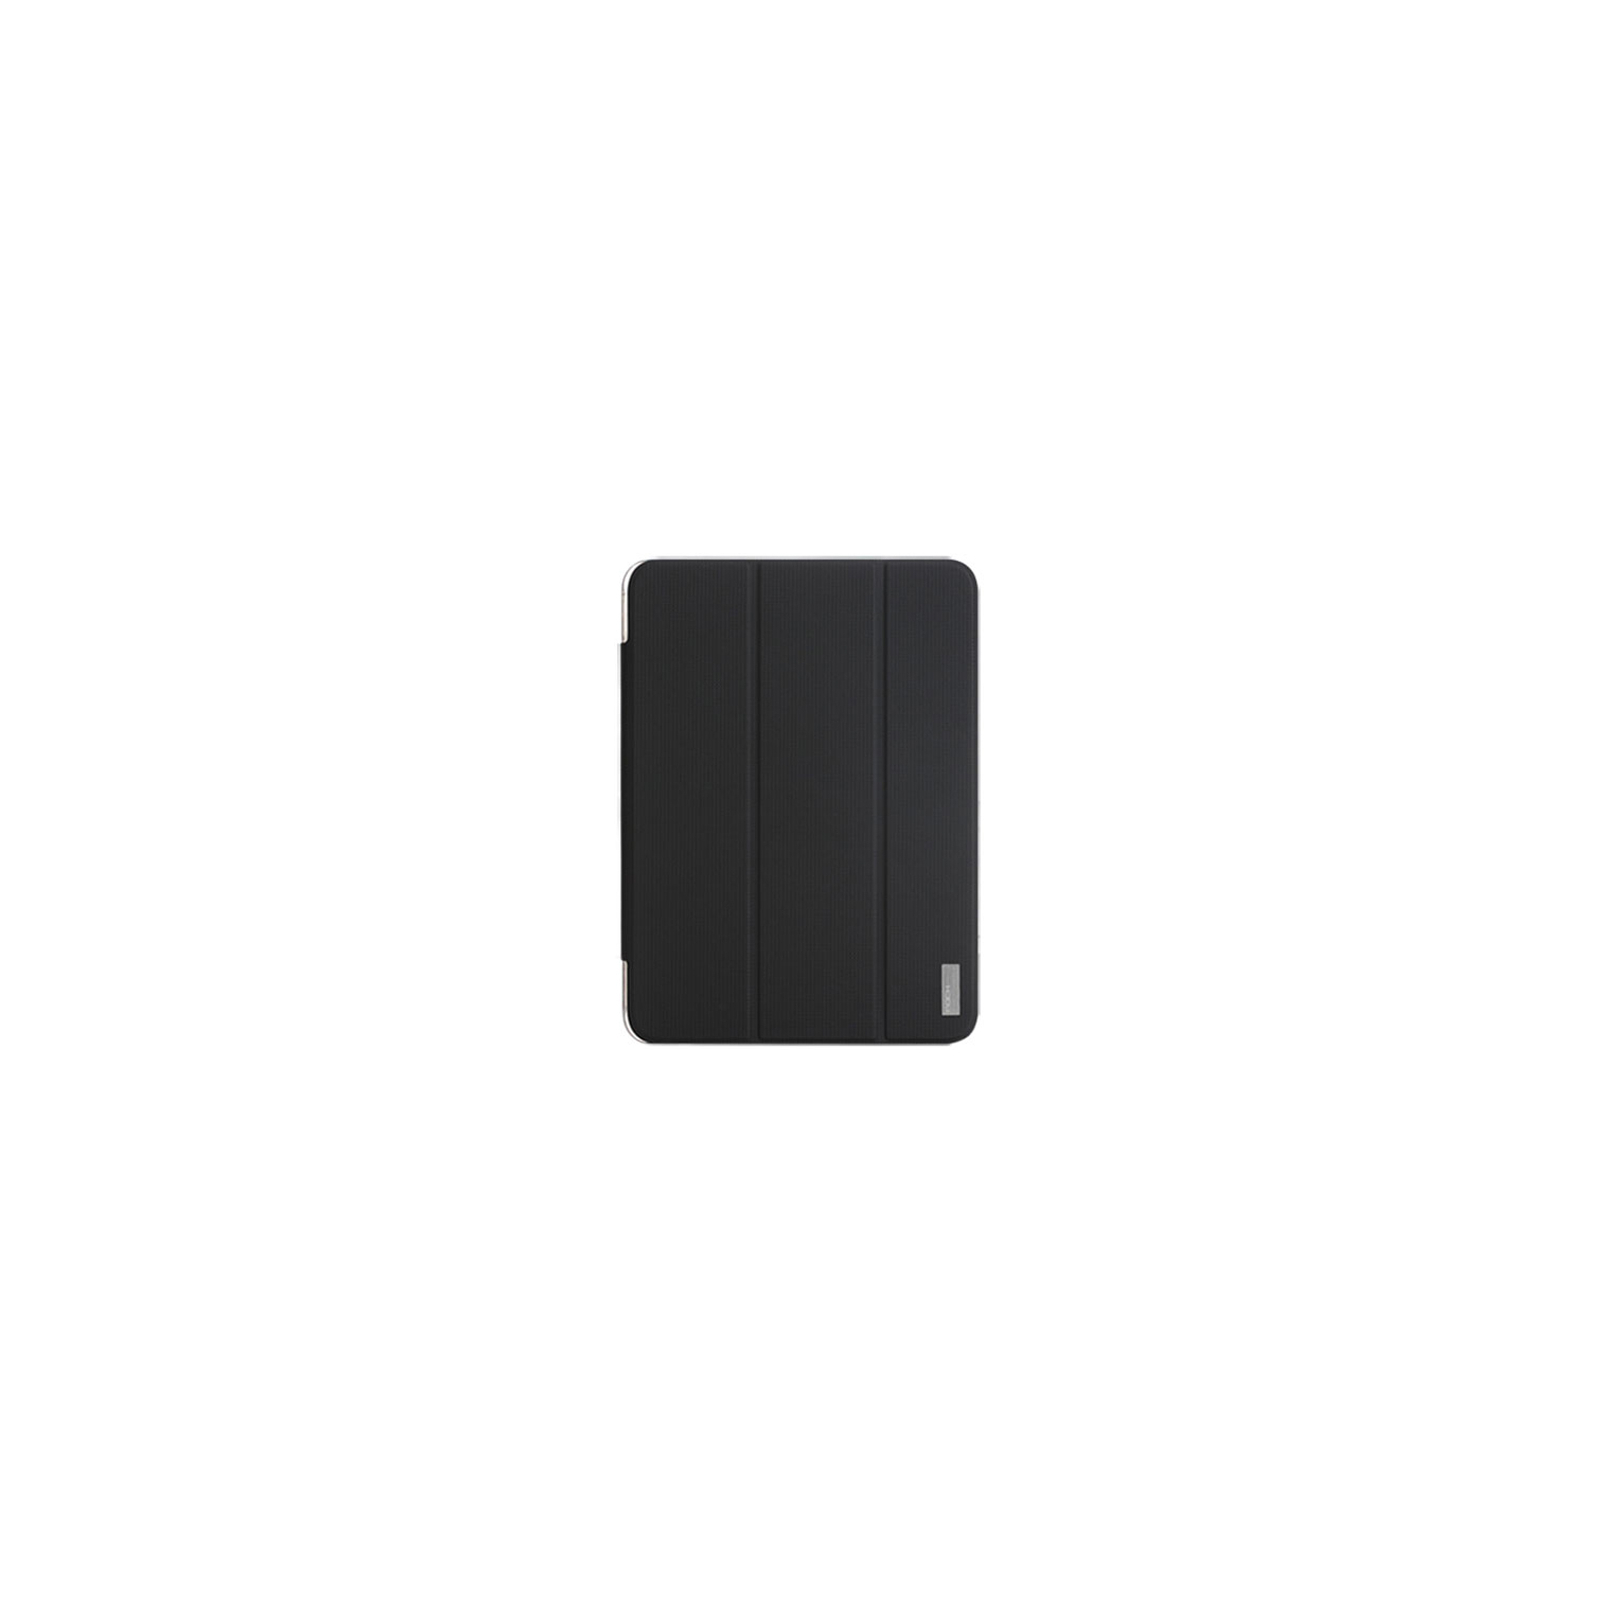 Чехол для планшета Rock Samsung Galaxy Tab 4 10.1 New elegant series black (Tab 4 10.1-65448)